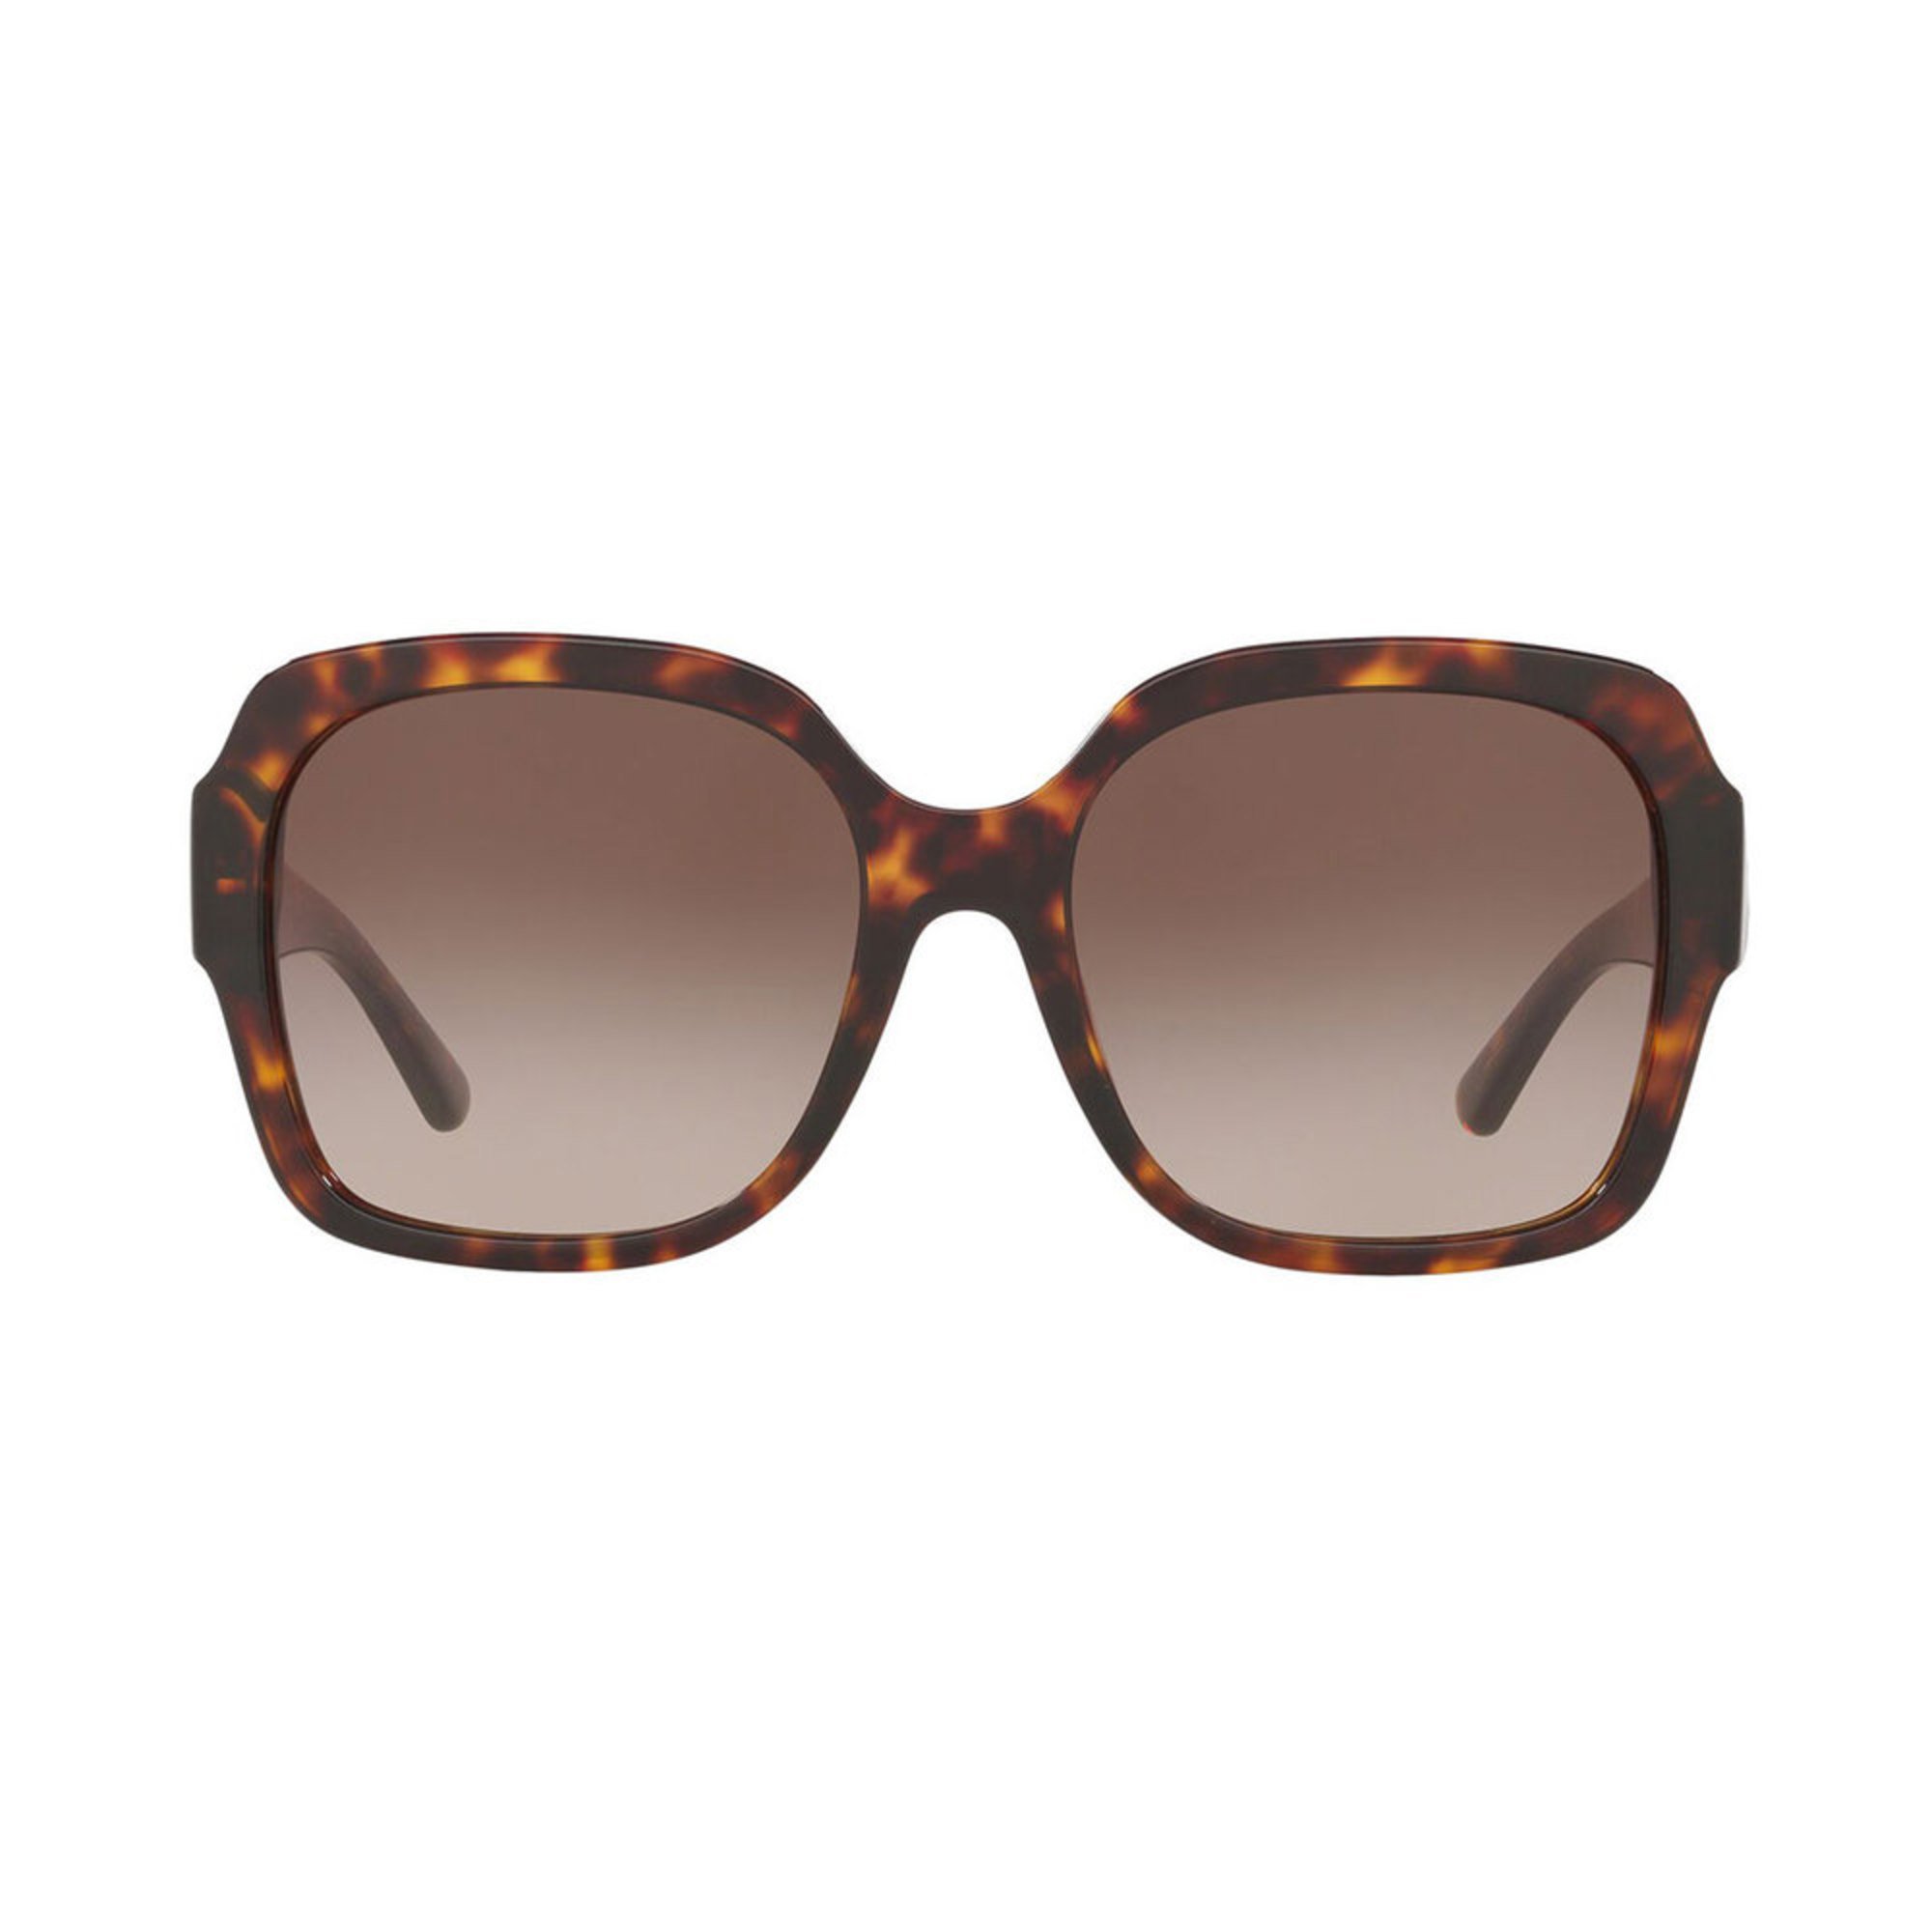 Tory Burch Womens Tortoise Square Sunglasses | Women's Sunglasses ...